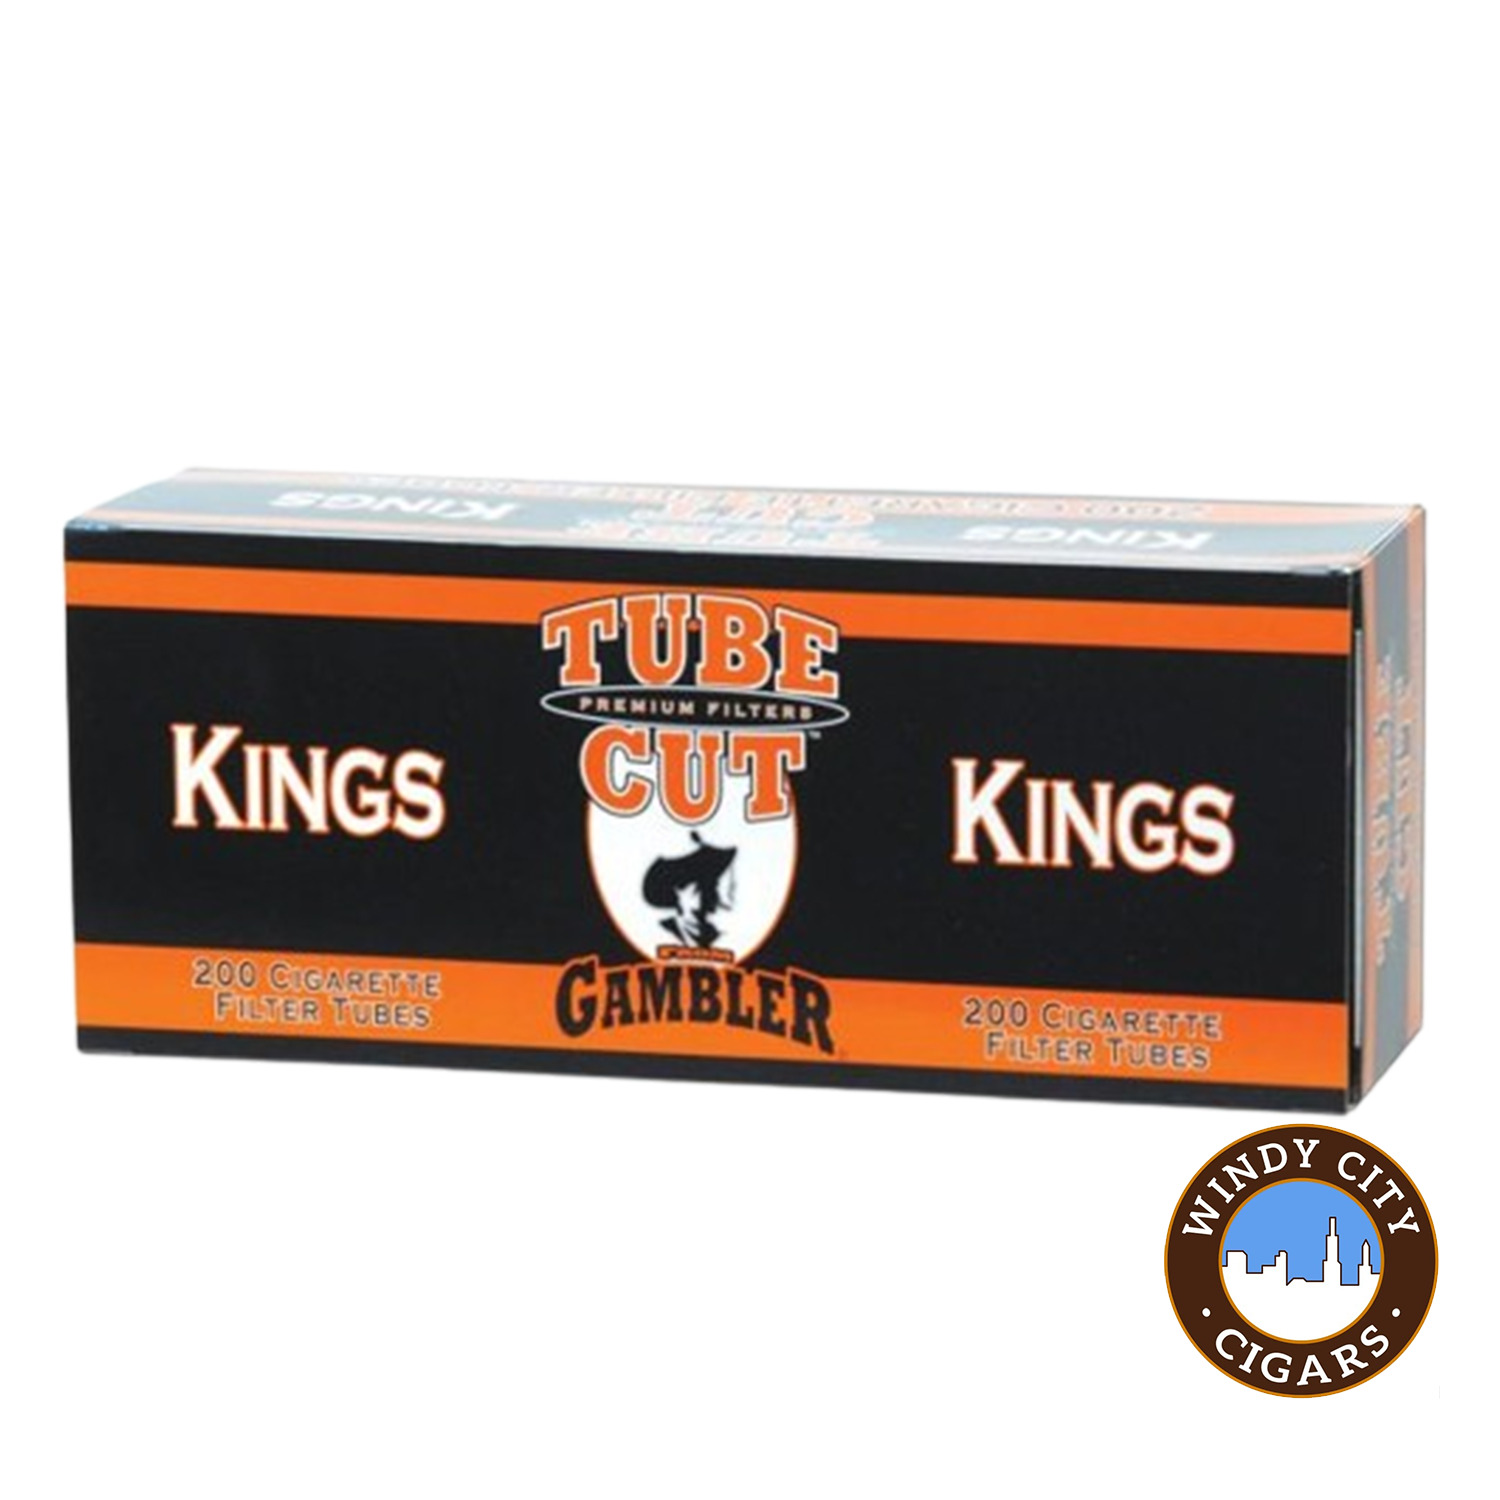 Tube Cut Regular King Cigarette 200ct Tubes - 5 Boxes